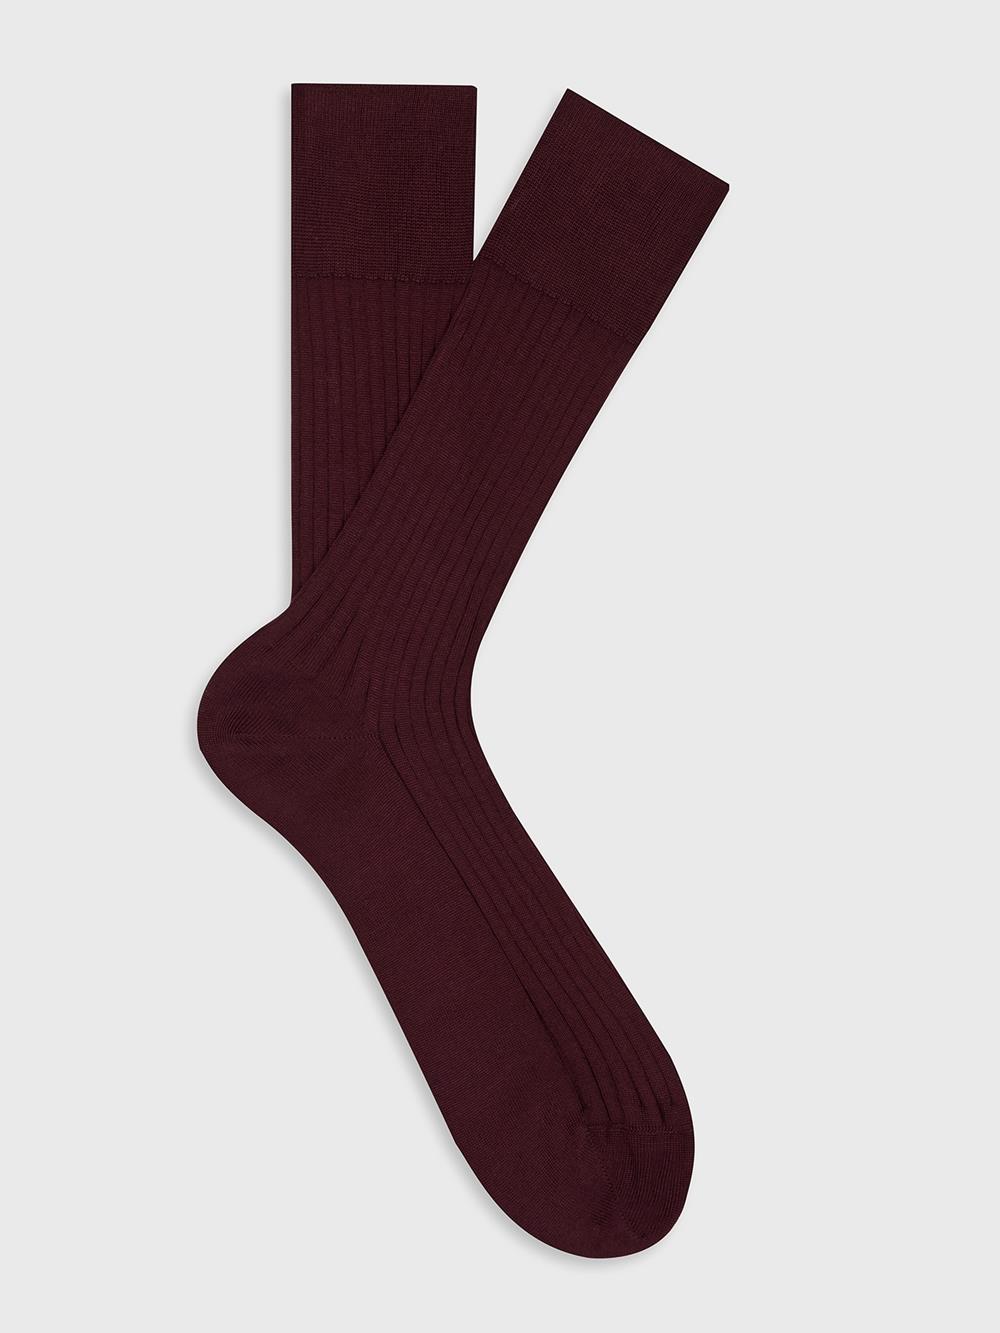 Bret Socken aus burgunderrotem Schottenkaro